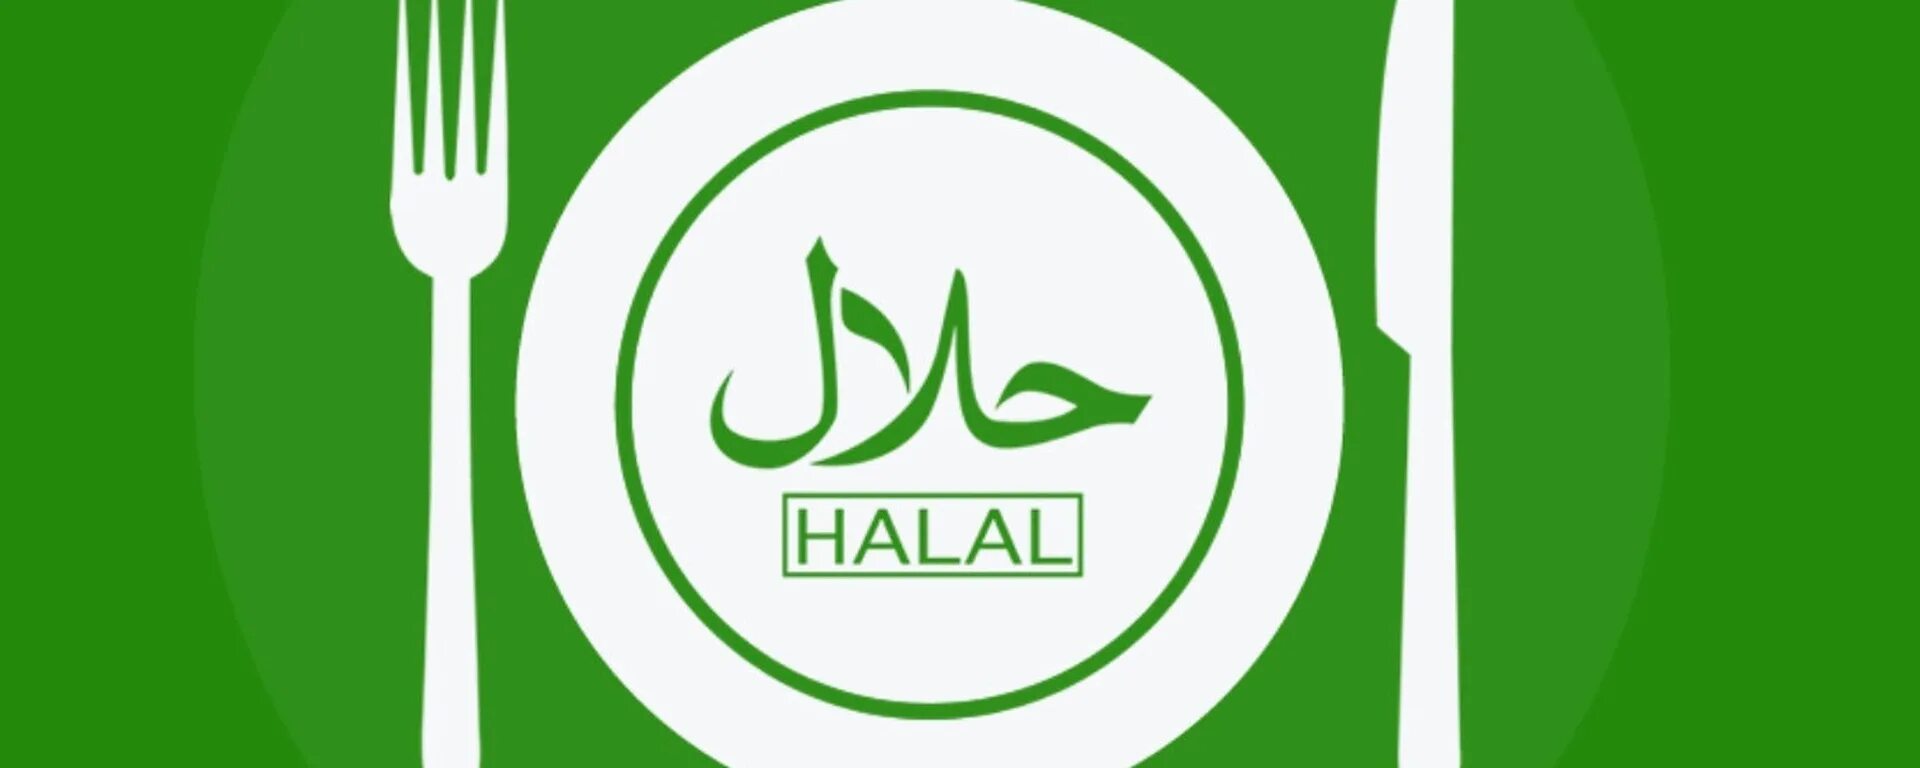 Халяль соки. Халяль. Эмблема Халяль. Логотип кафе Халяль. Значок Халяль зеленый.